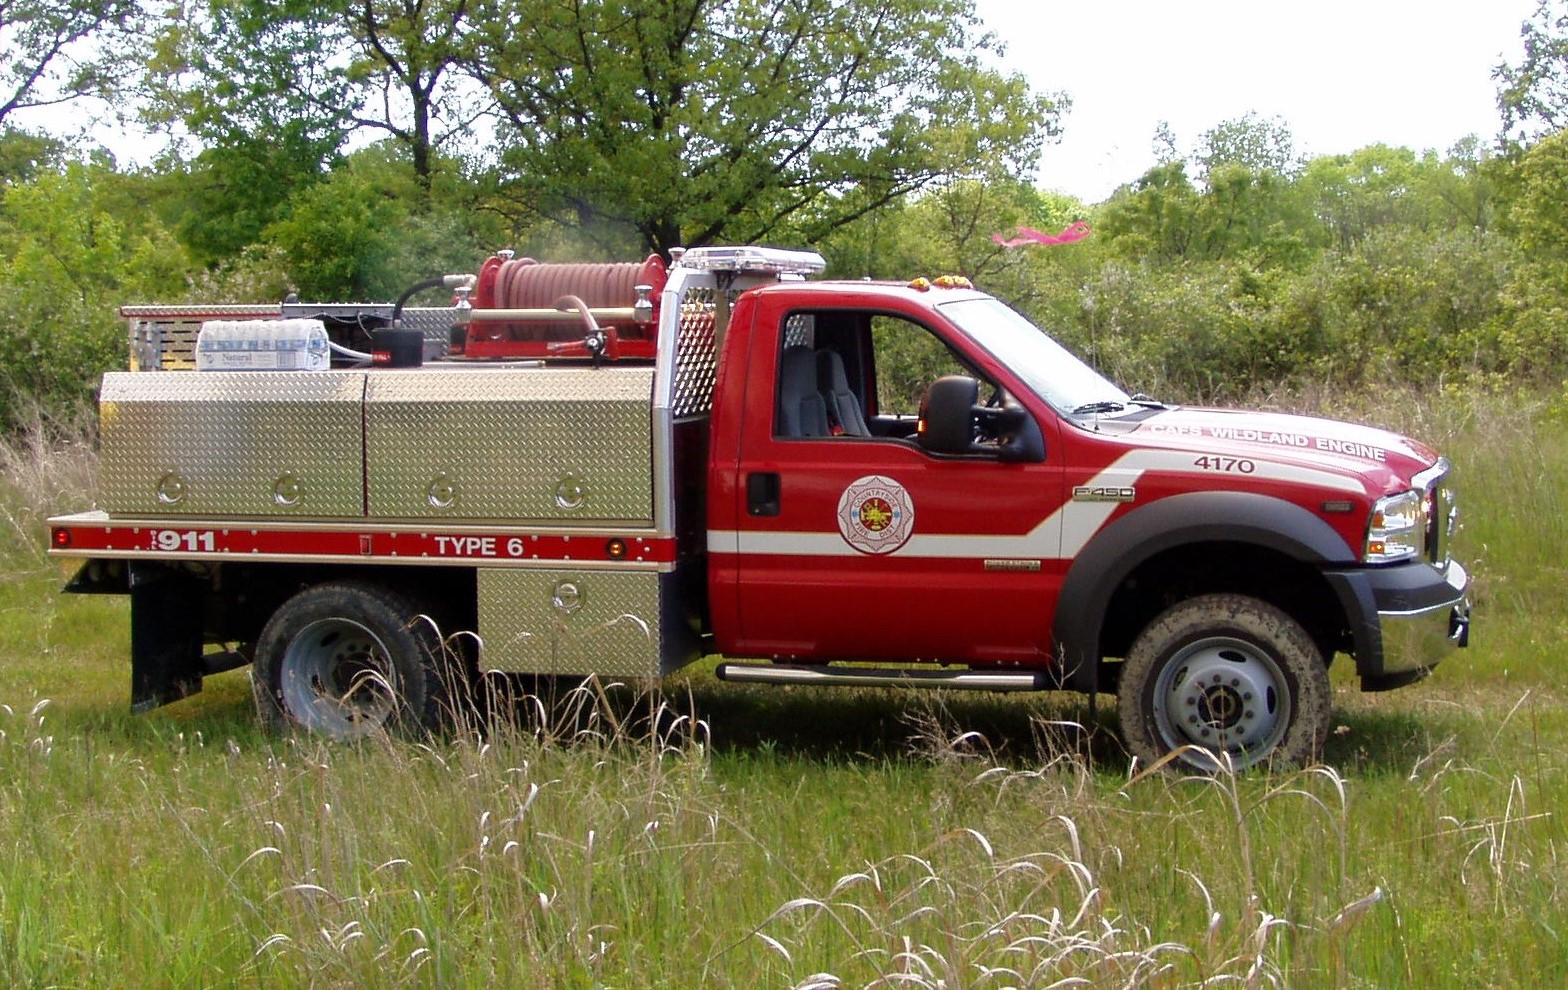 Volunteer Fire Assistance Grant Vehicle 